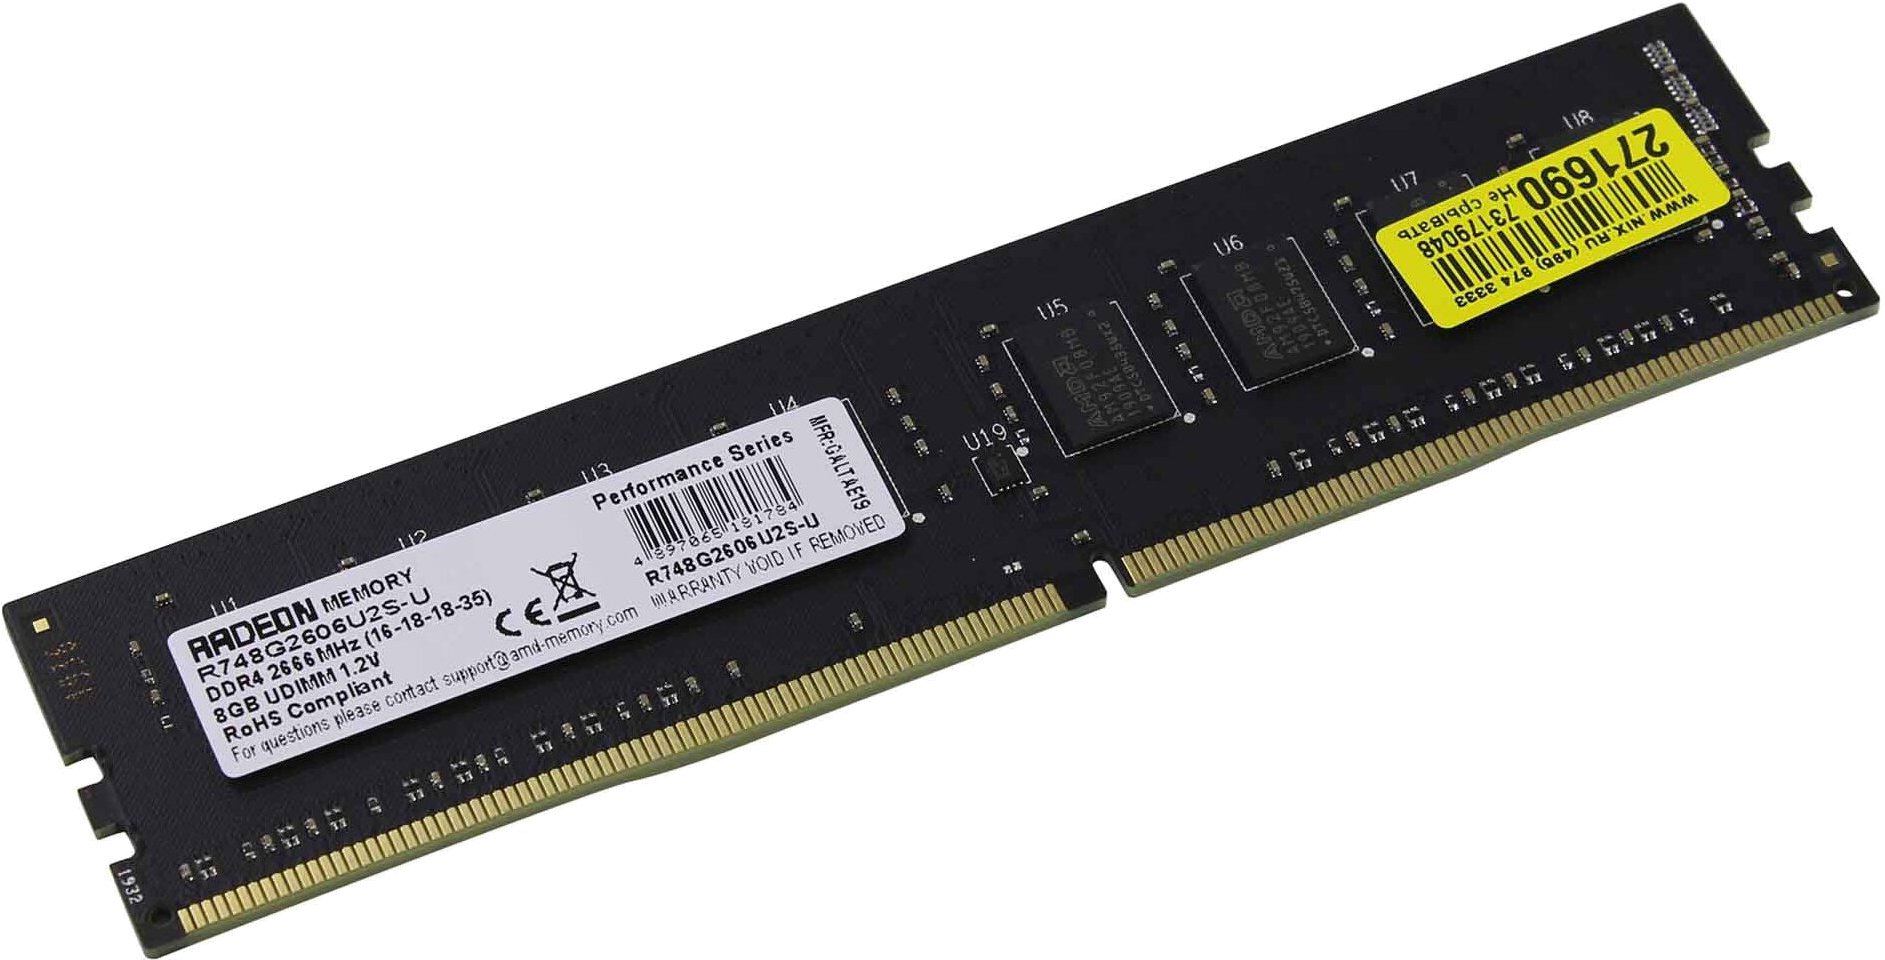  AMD Radeon R7 Performance 8 DDR4 2666 DIMM CL16, Ret (R748G2606U2S-U) ()